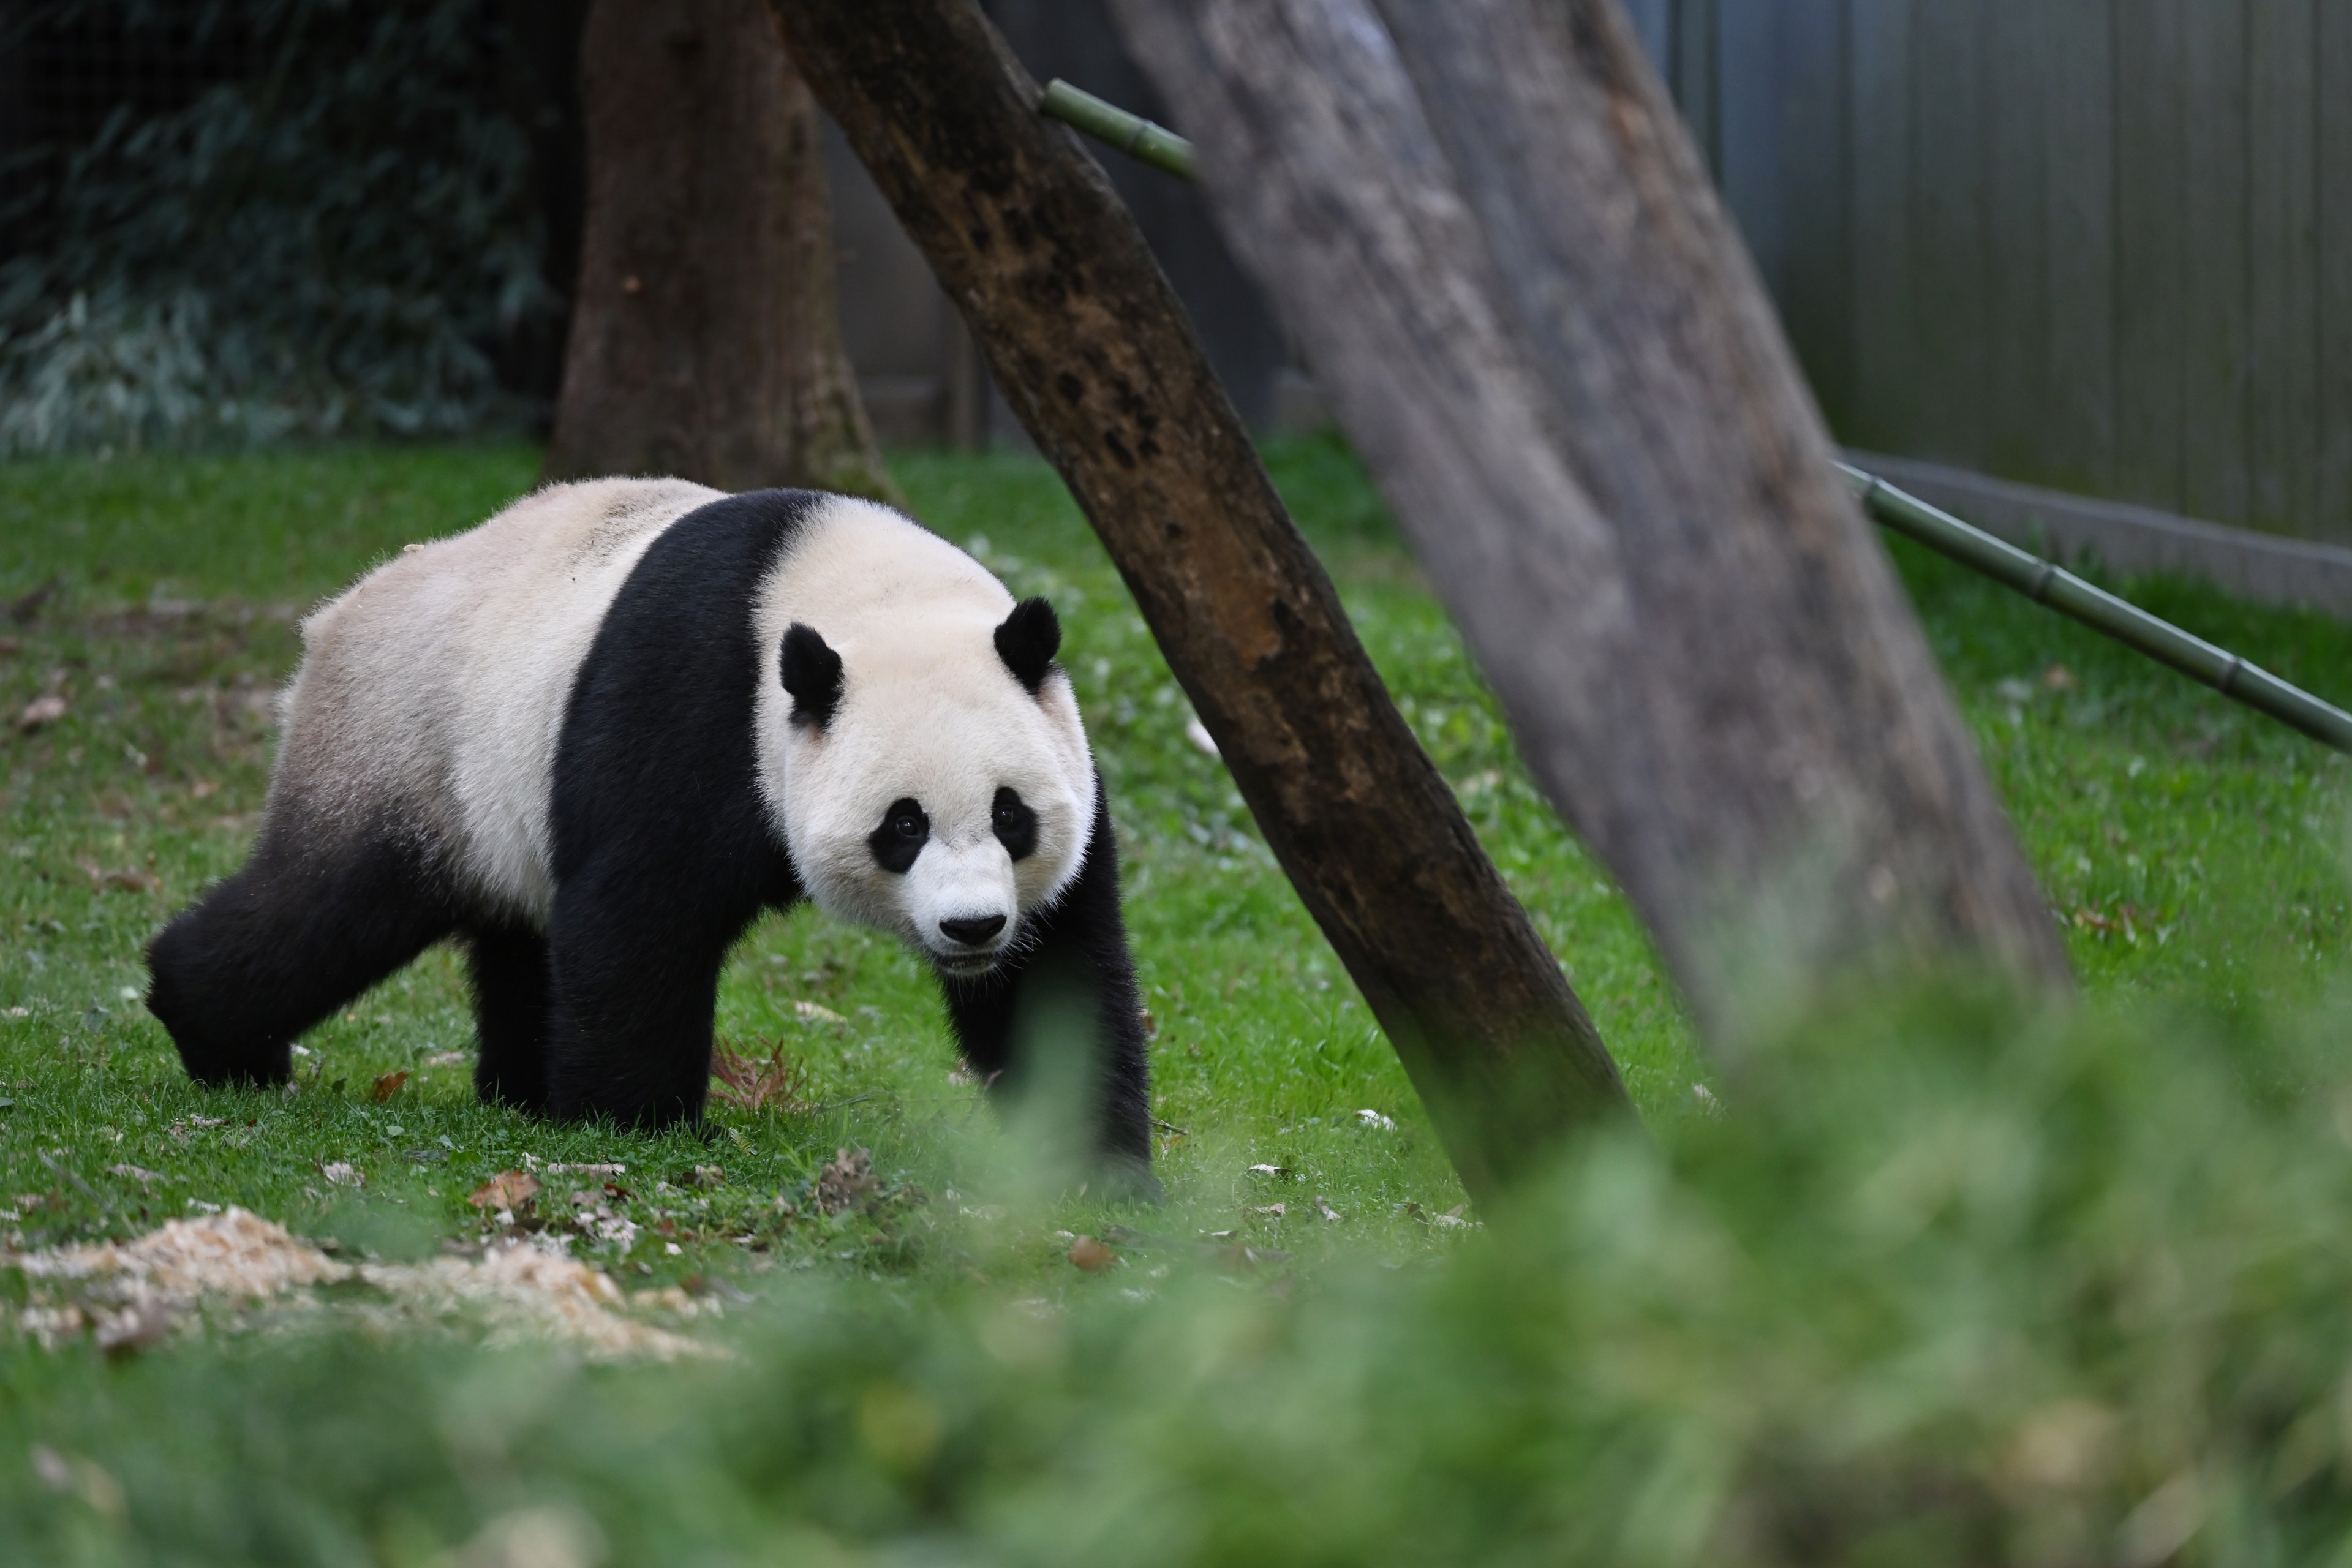 A giant panda walks through grass near wooden structures, looking toward the camera.